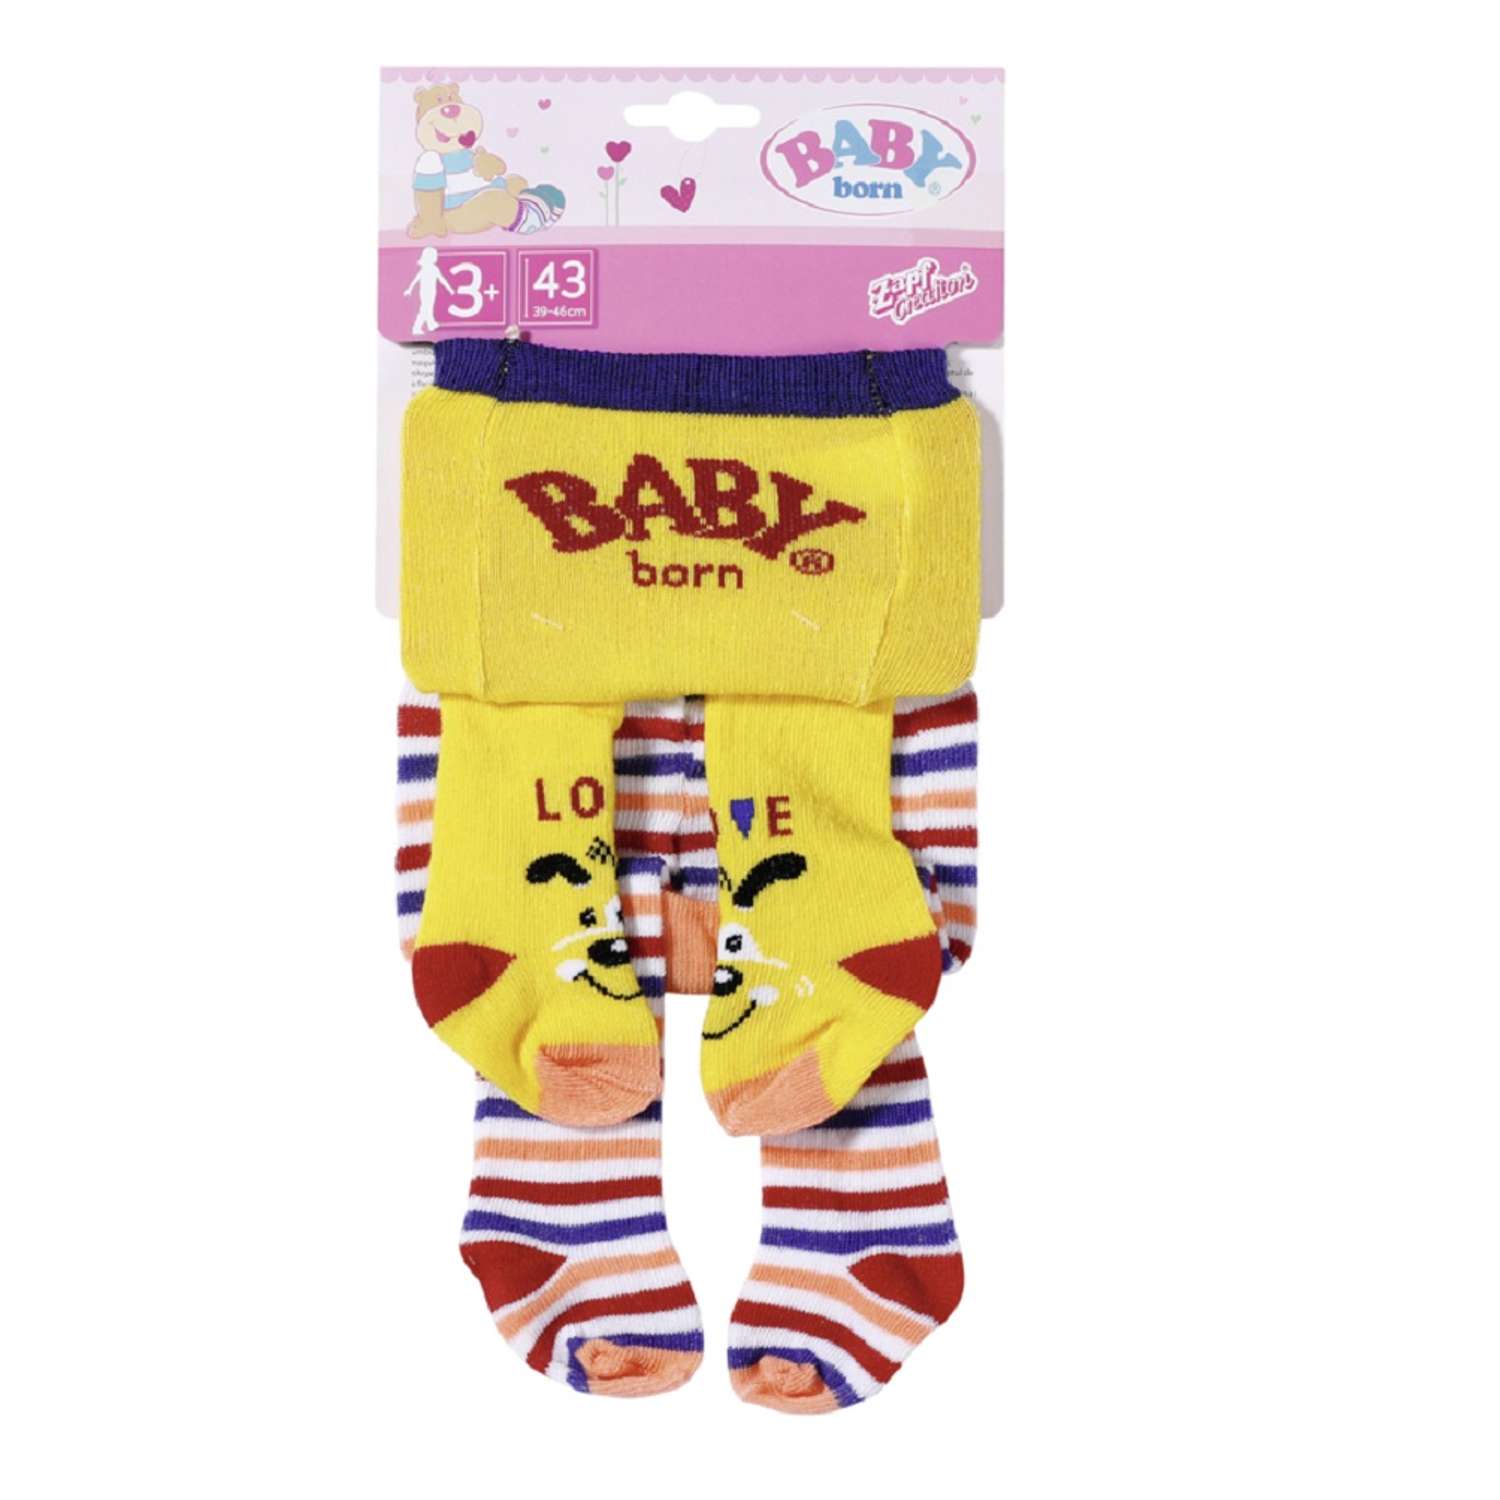 Игрушка Zapf Creation Baby Born Колготки 2 пары желтые и полоска на куклу 43 см 831-748Y - фото 1